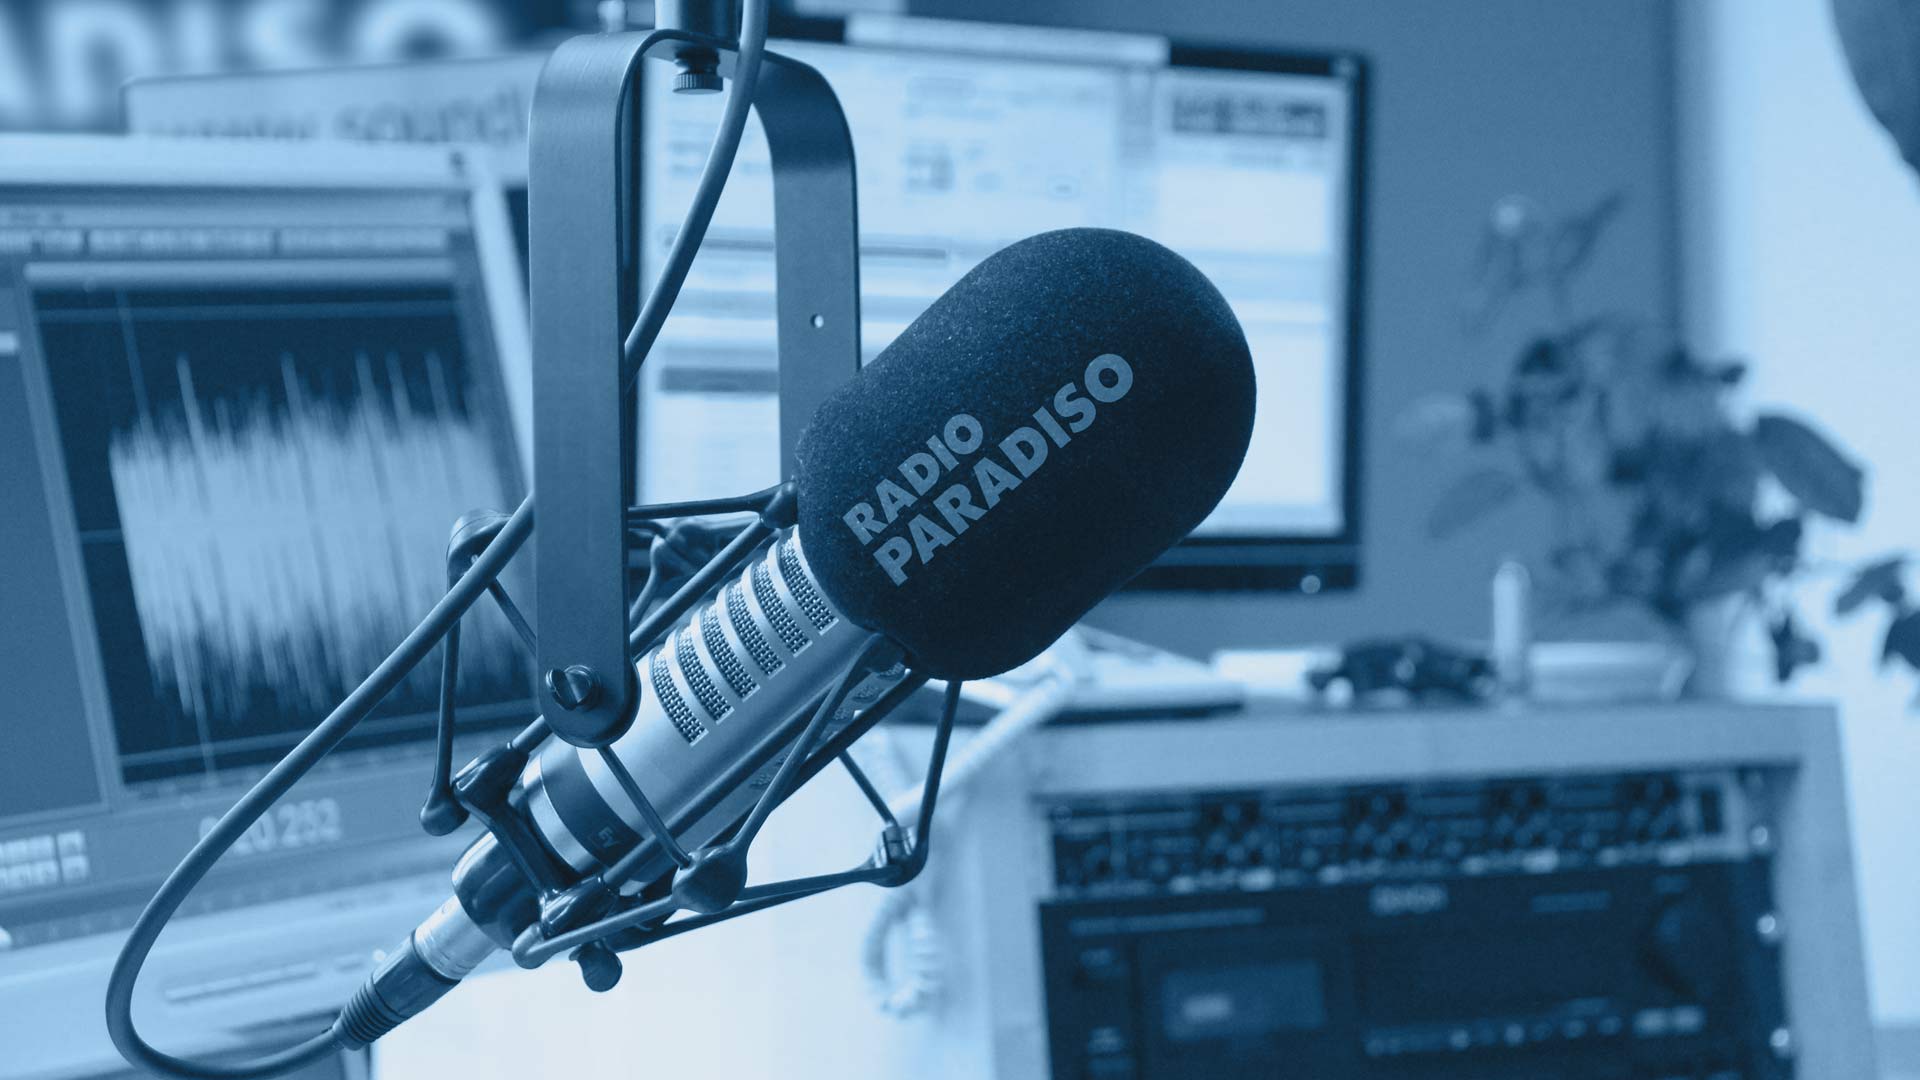 Radio Paradiso.De